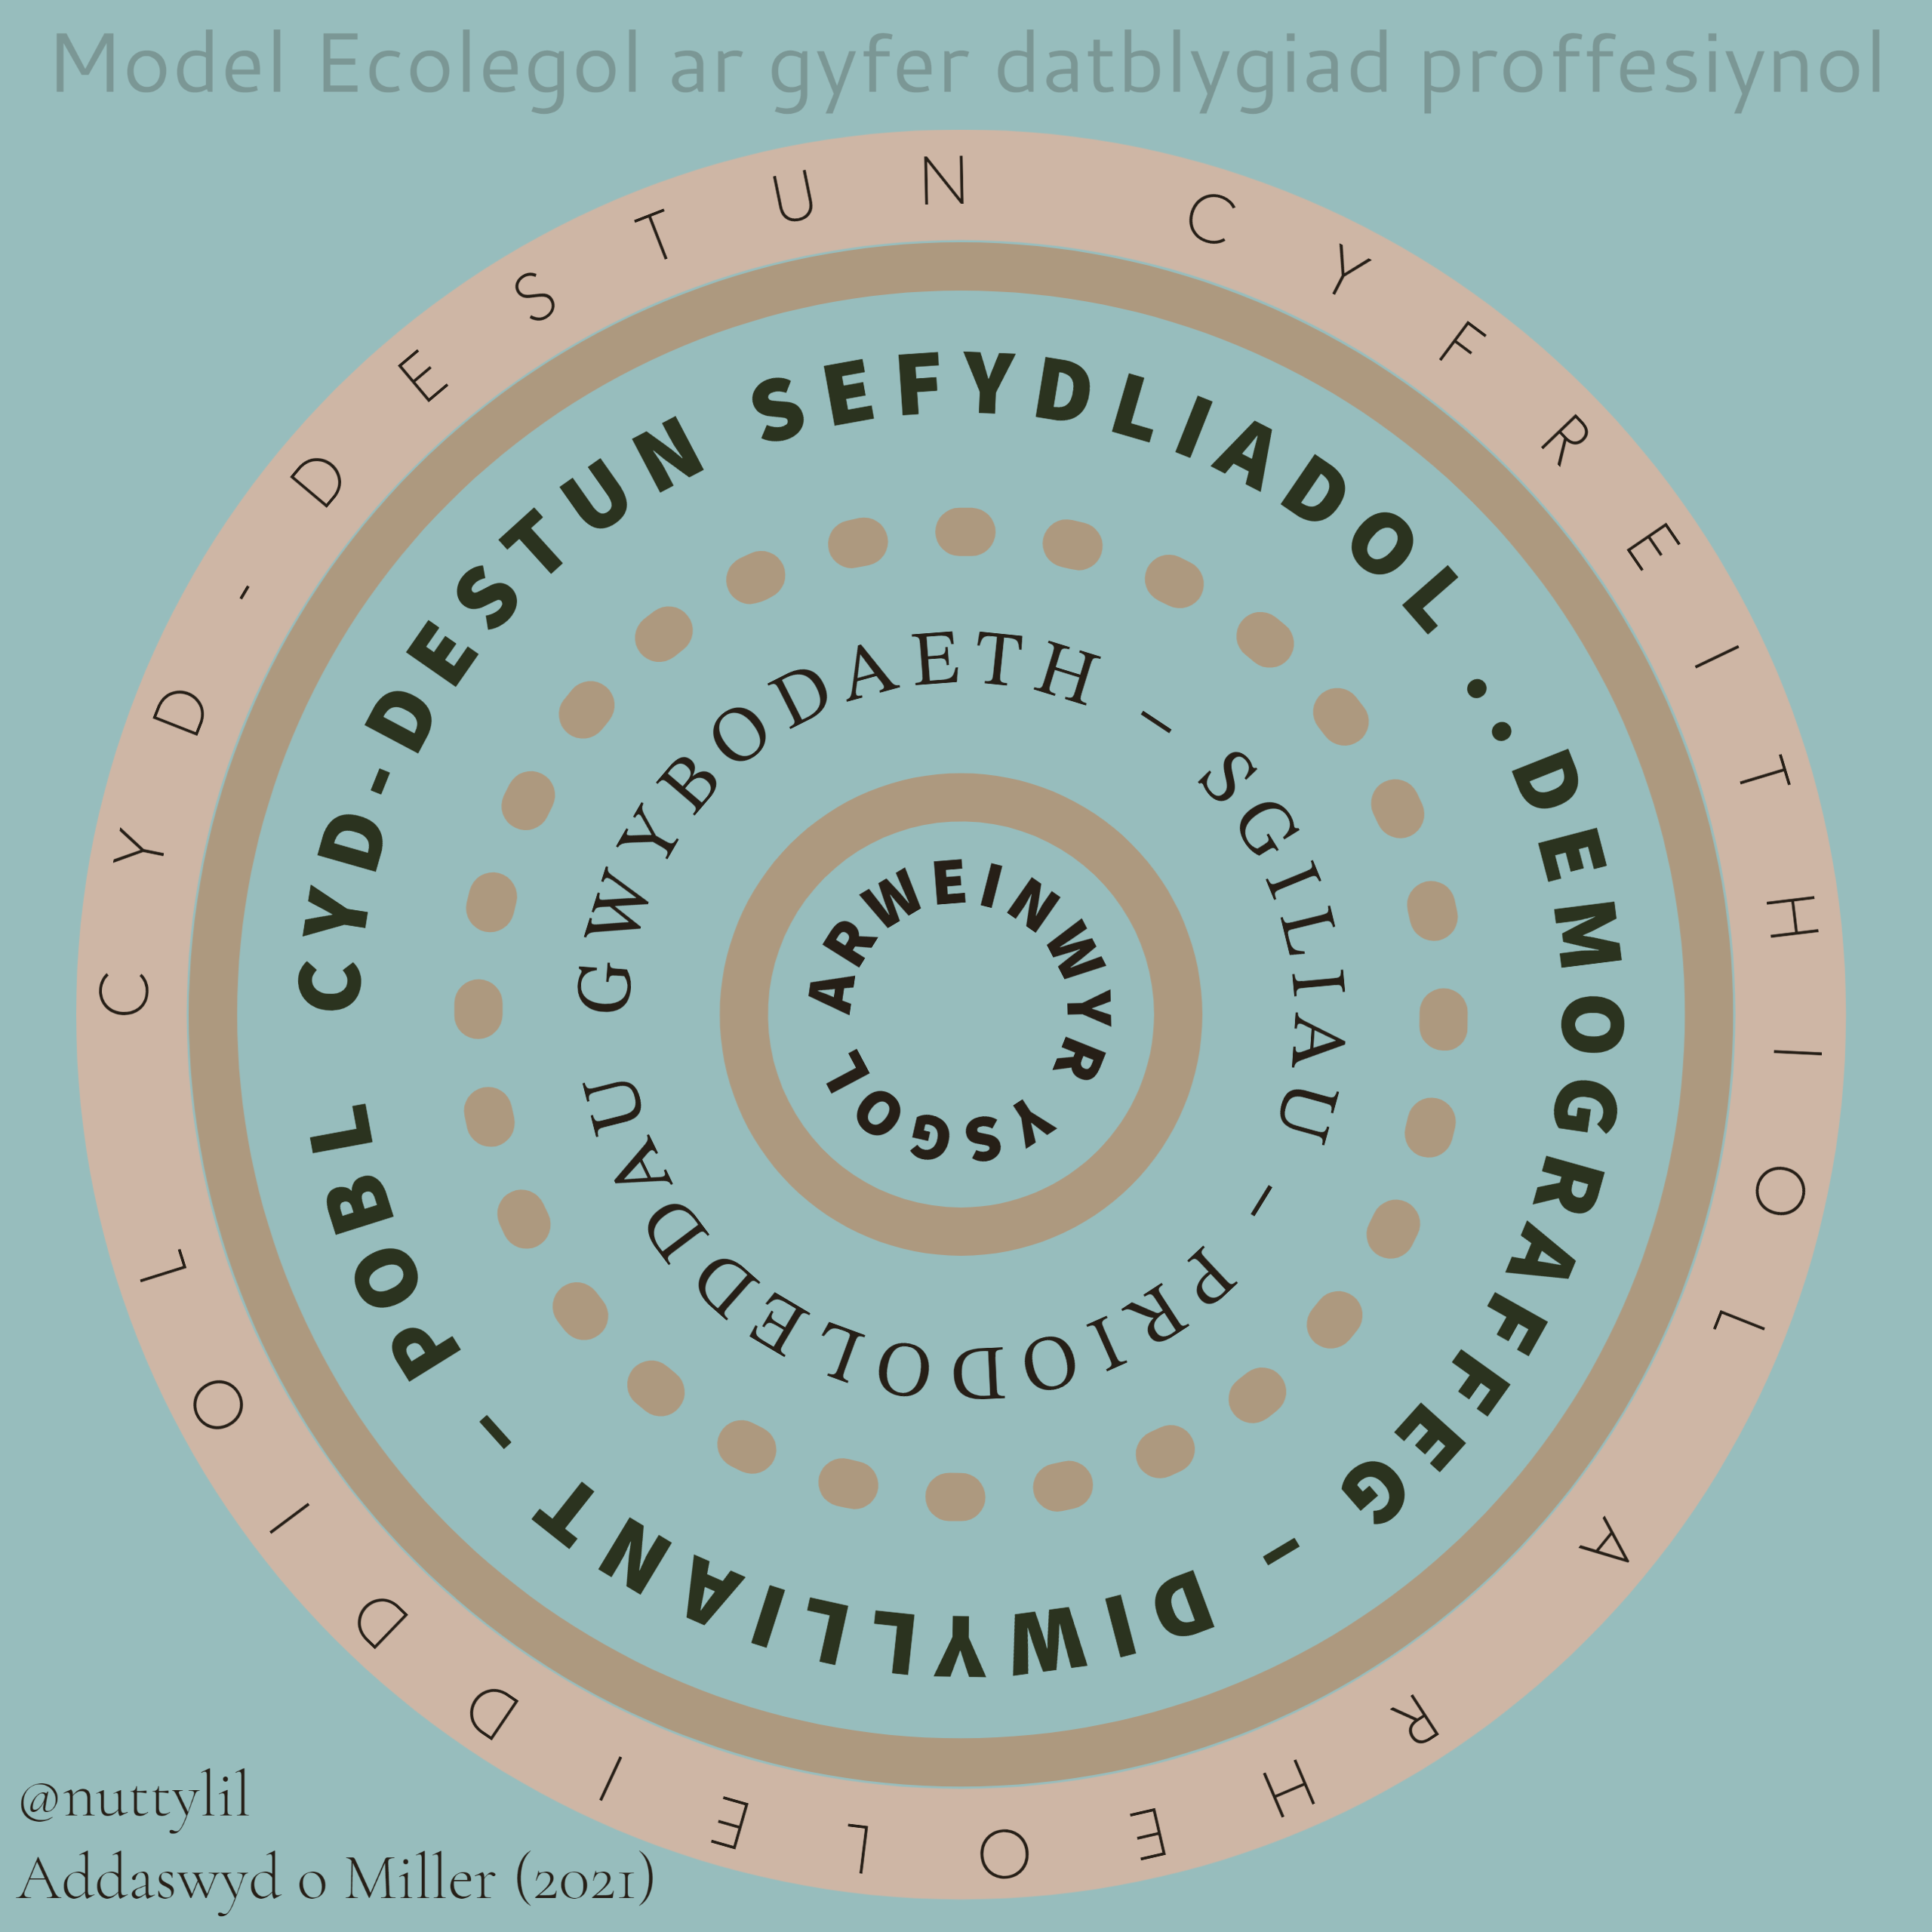 Ecological model for headteachers 4